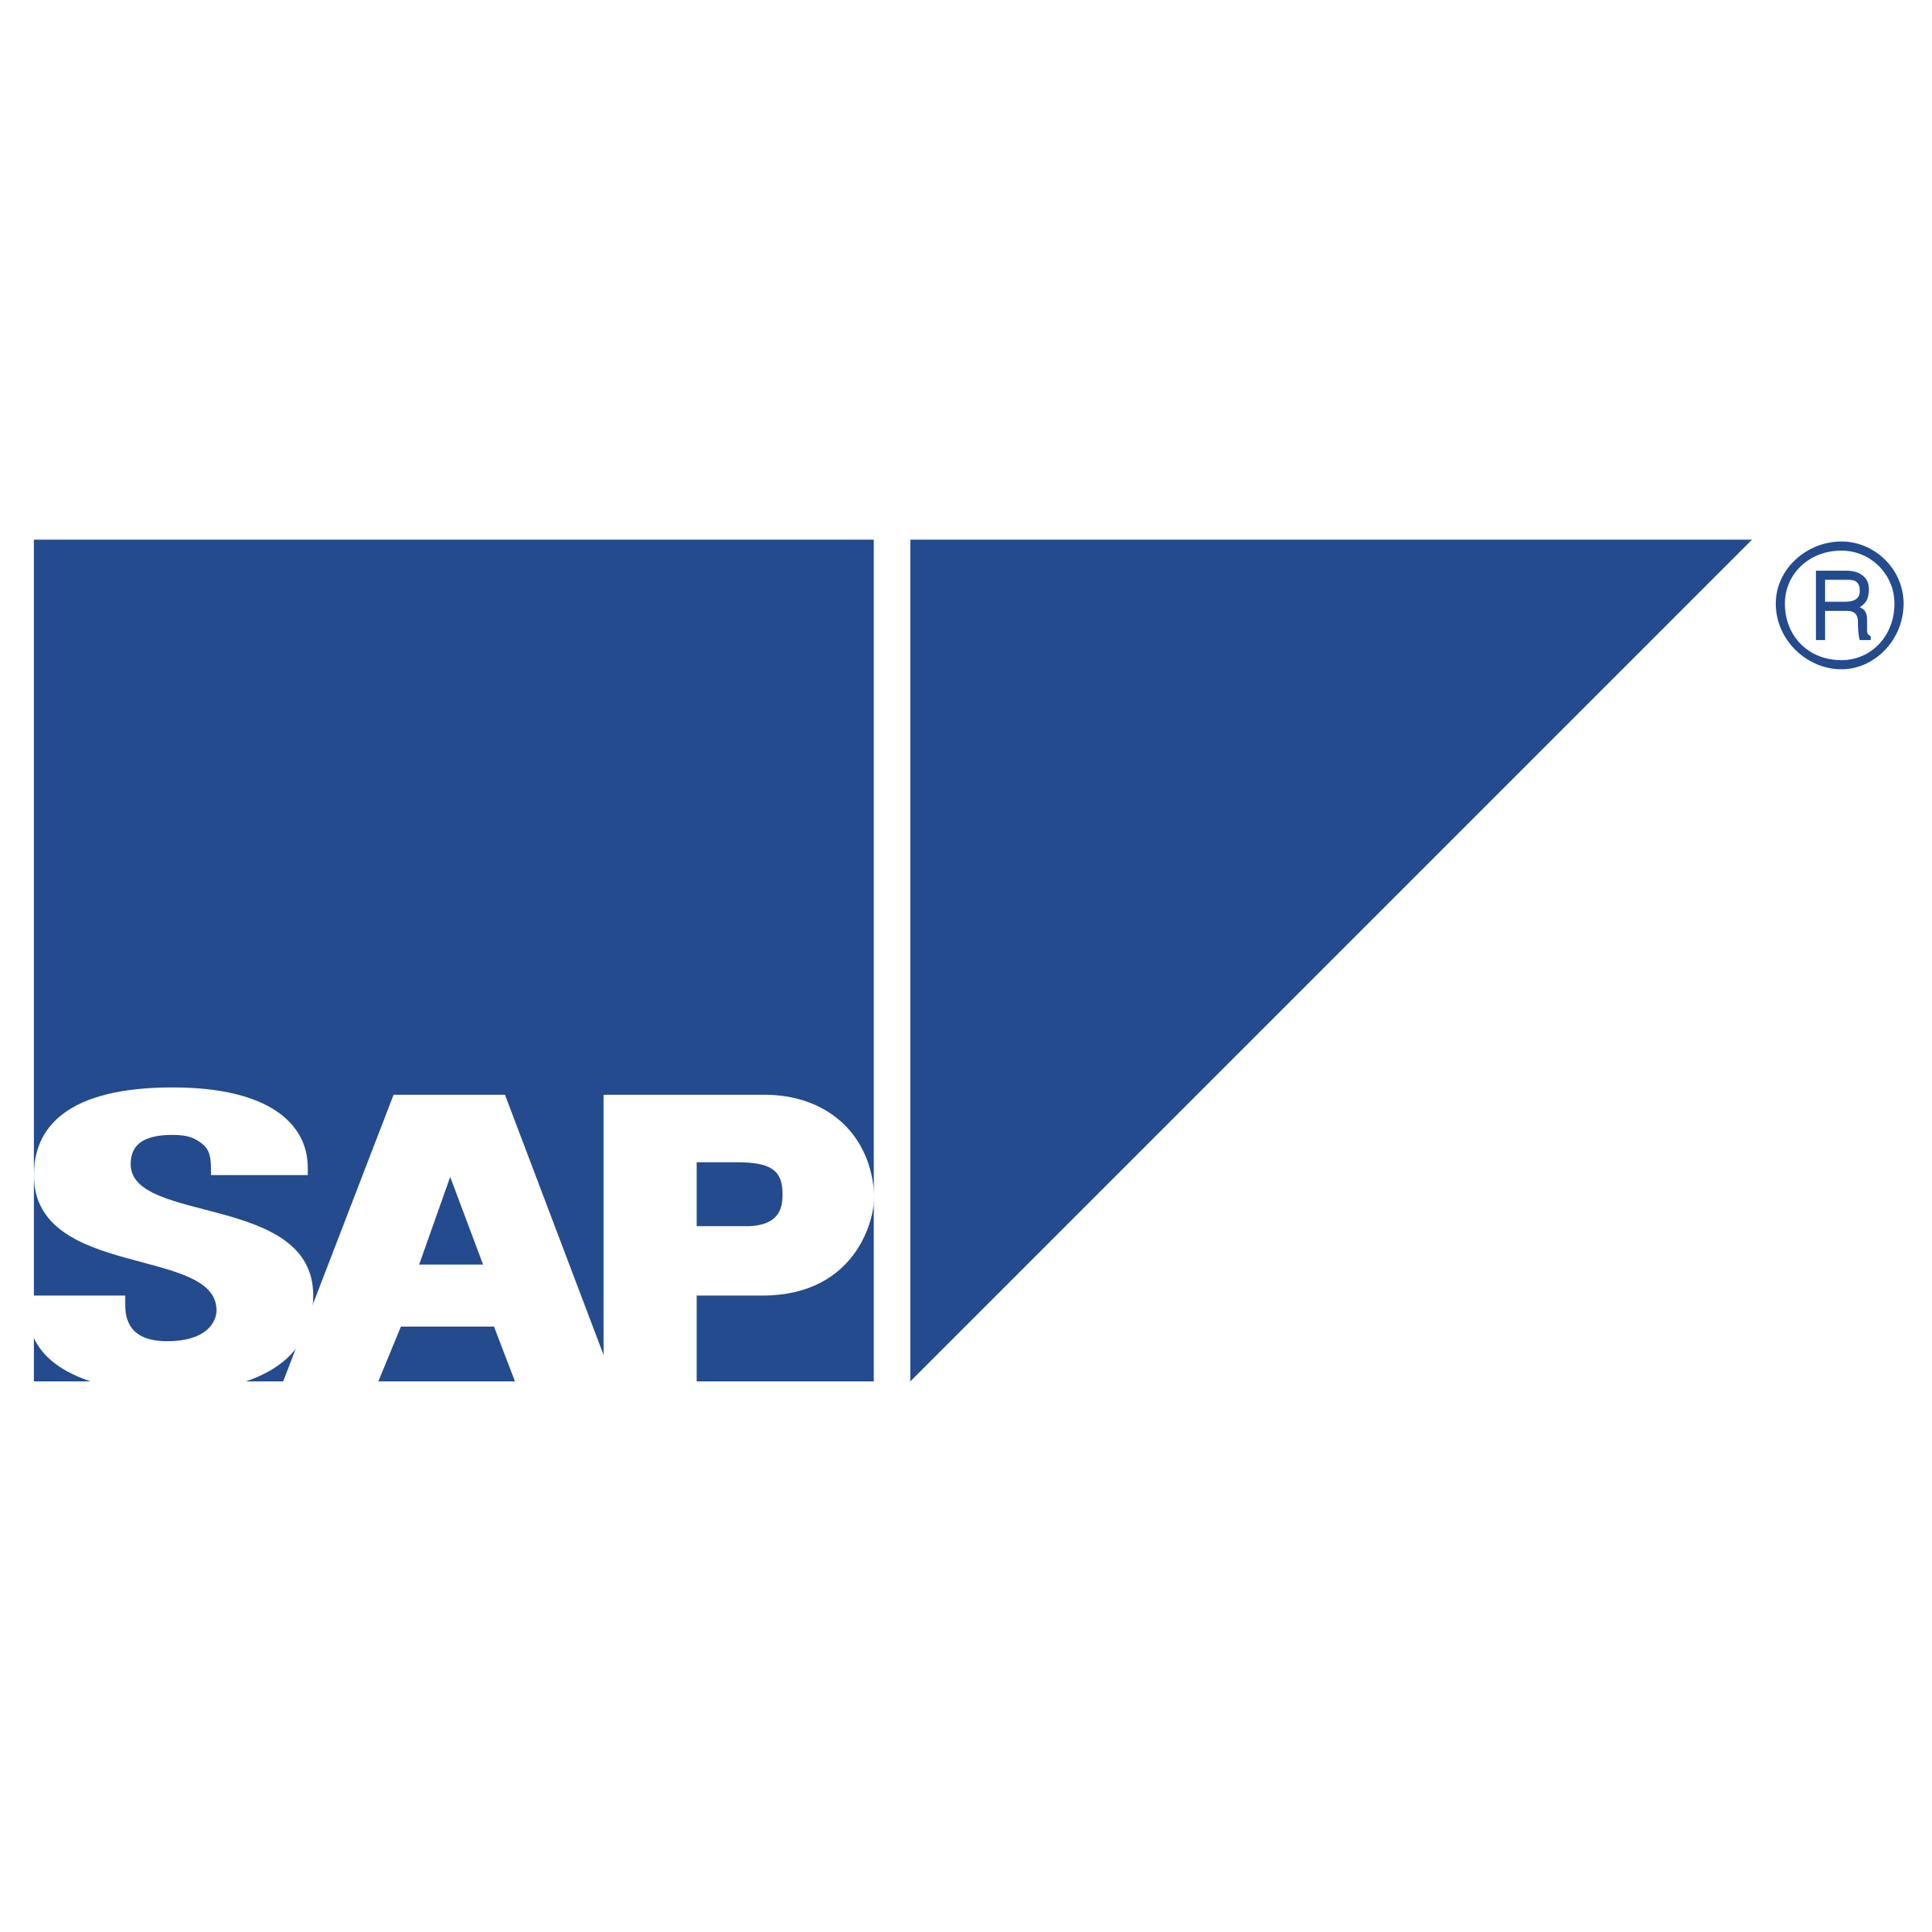 SAP Logo PNG Transparent & SVG Vector.